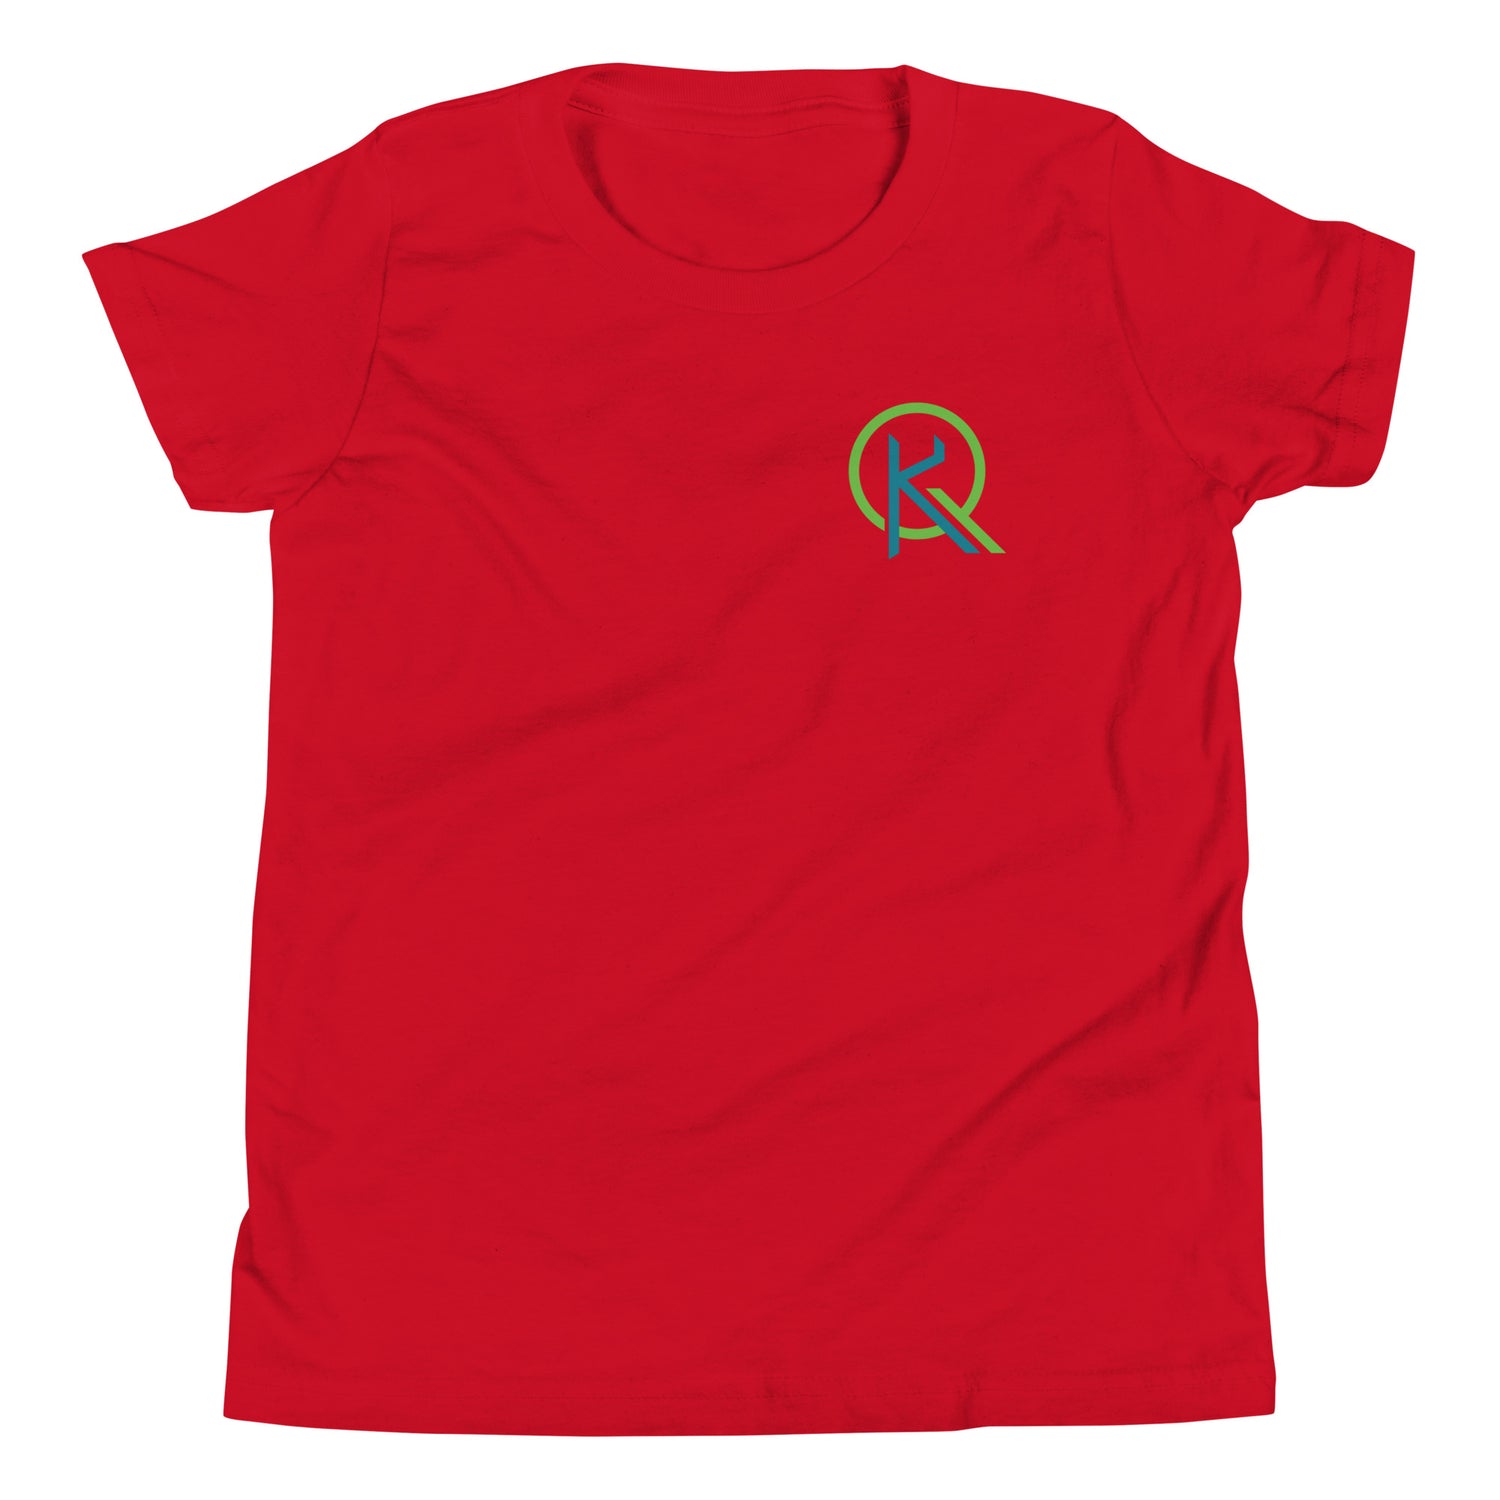 Kai Queen "Essential" Youth T-Shirt - Fan Arch